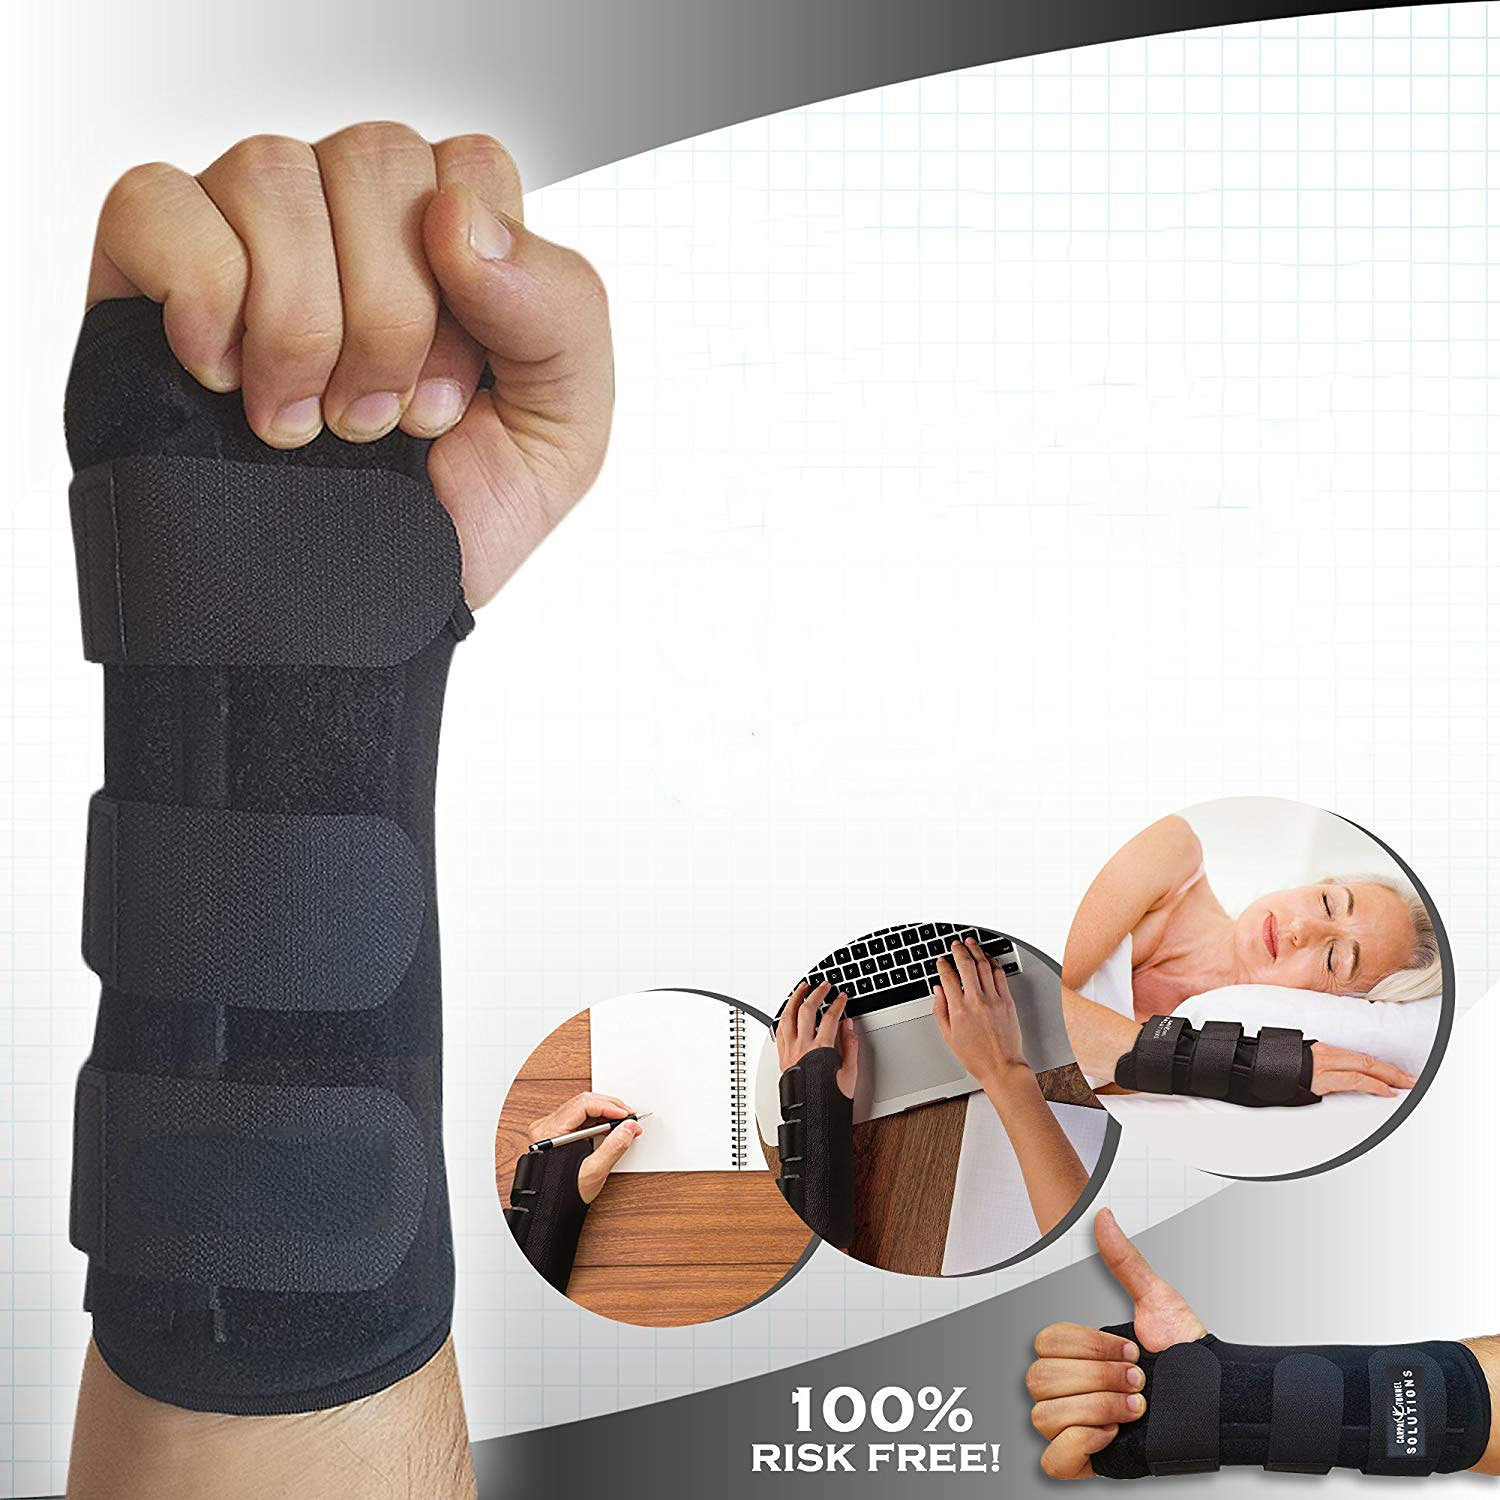 Breathable Hand Wrist Brace Support Splint Carpal Tunnel Sprain Arthritis  Gym